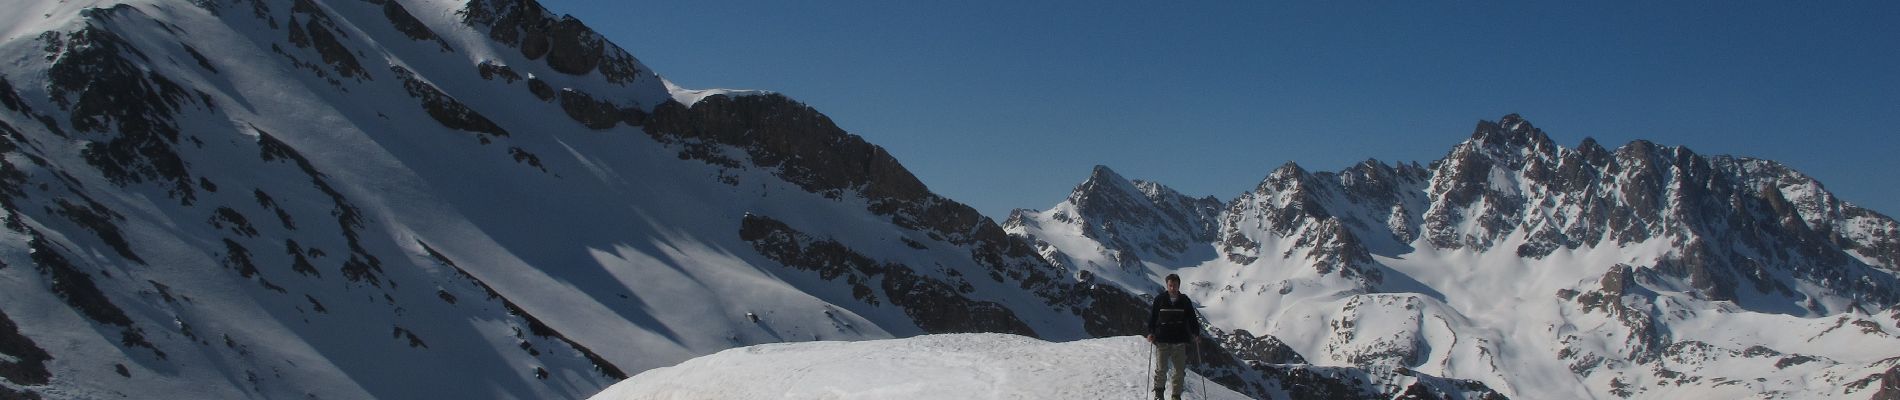 Tocht Ski randonnée Saint-Paul-sur-Ubaye - L'alpet (Ski) - Photo